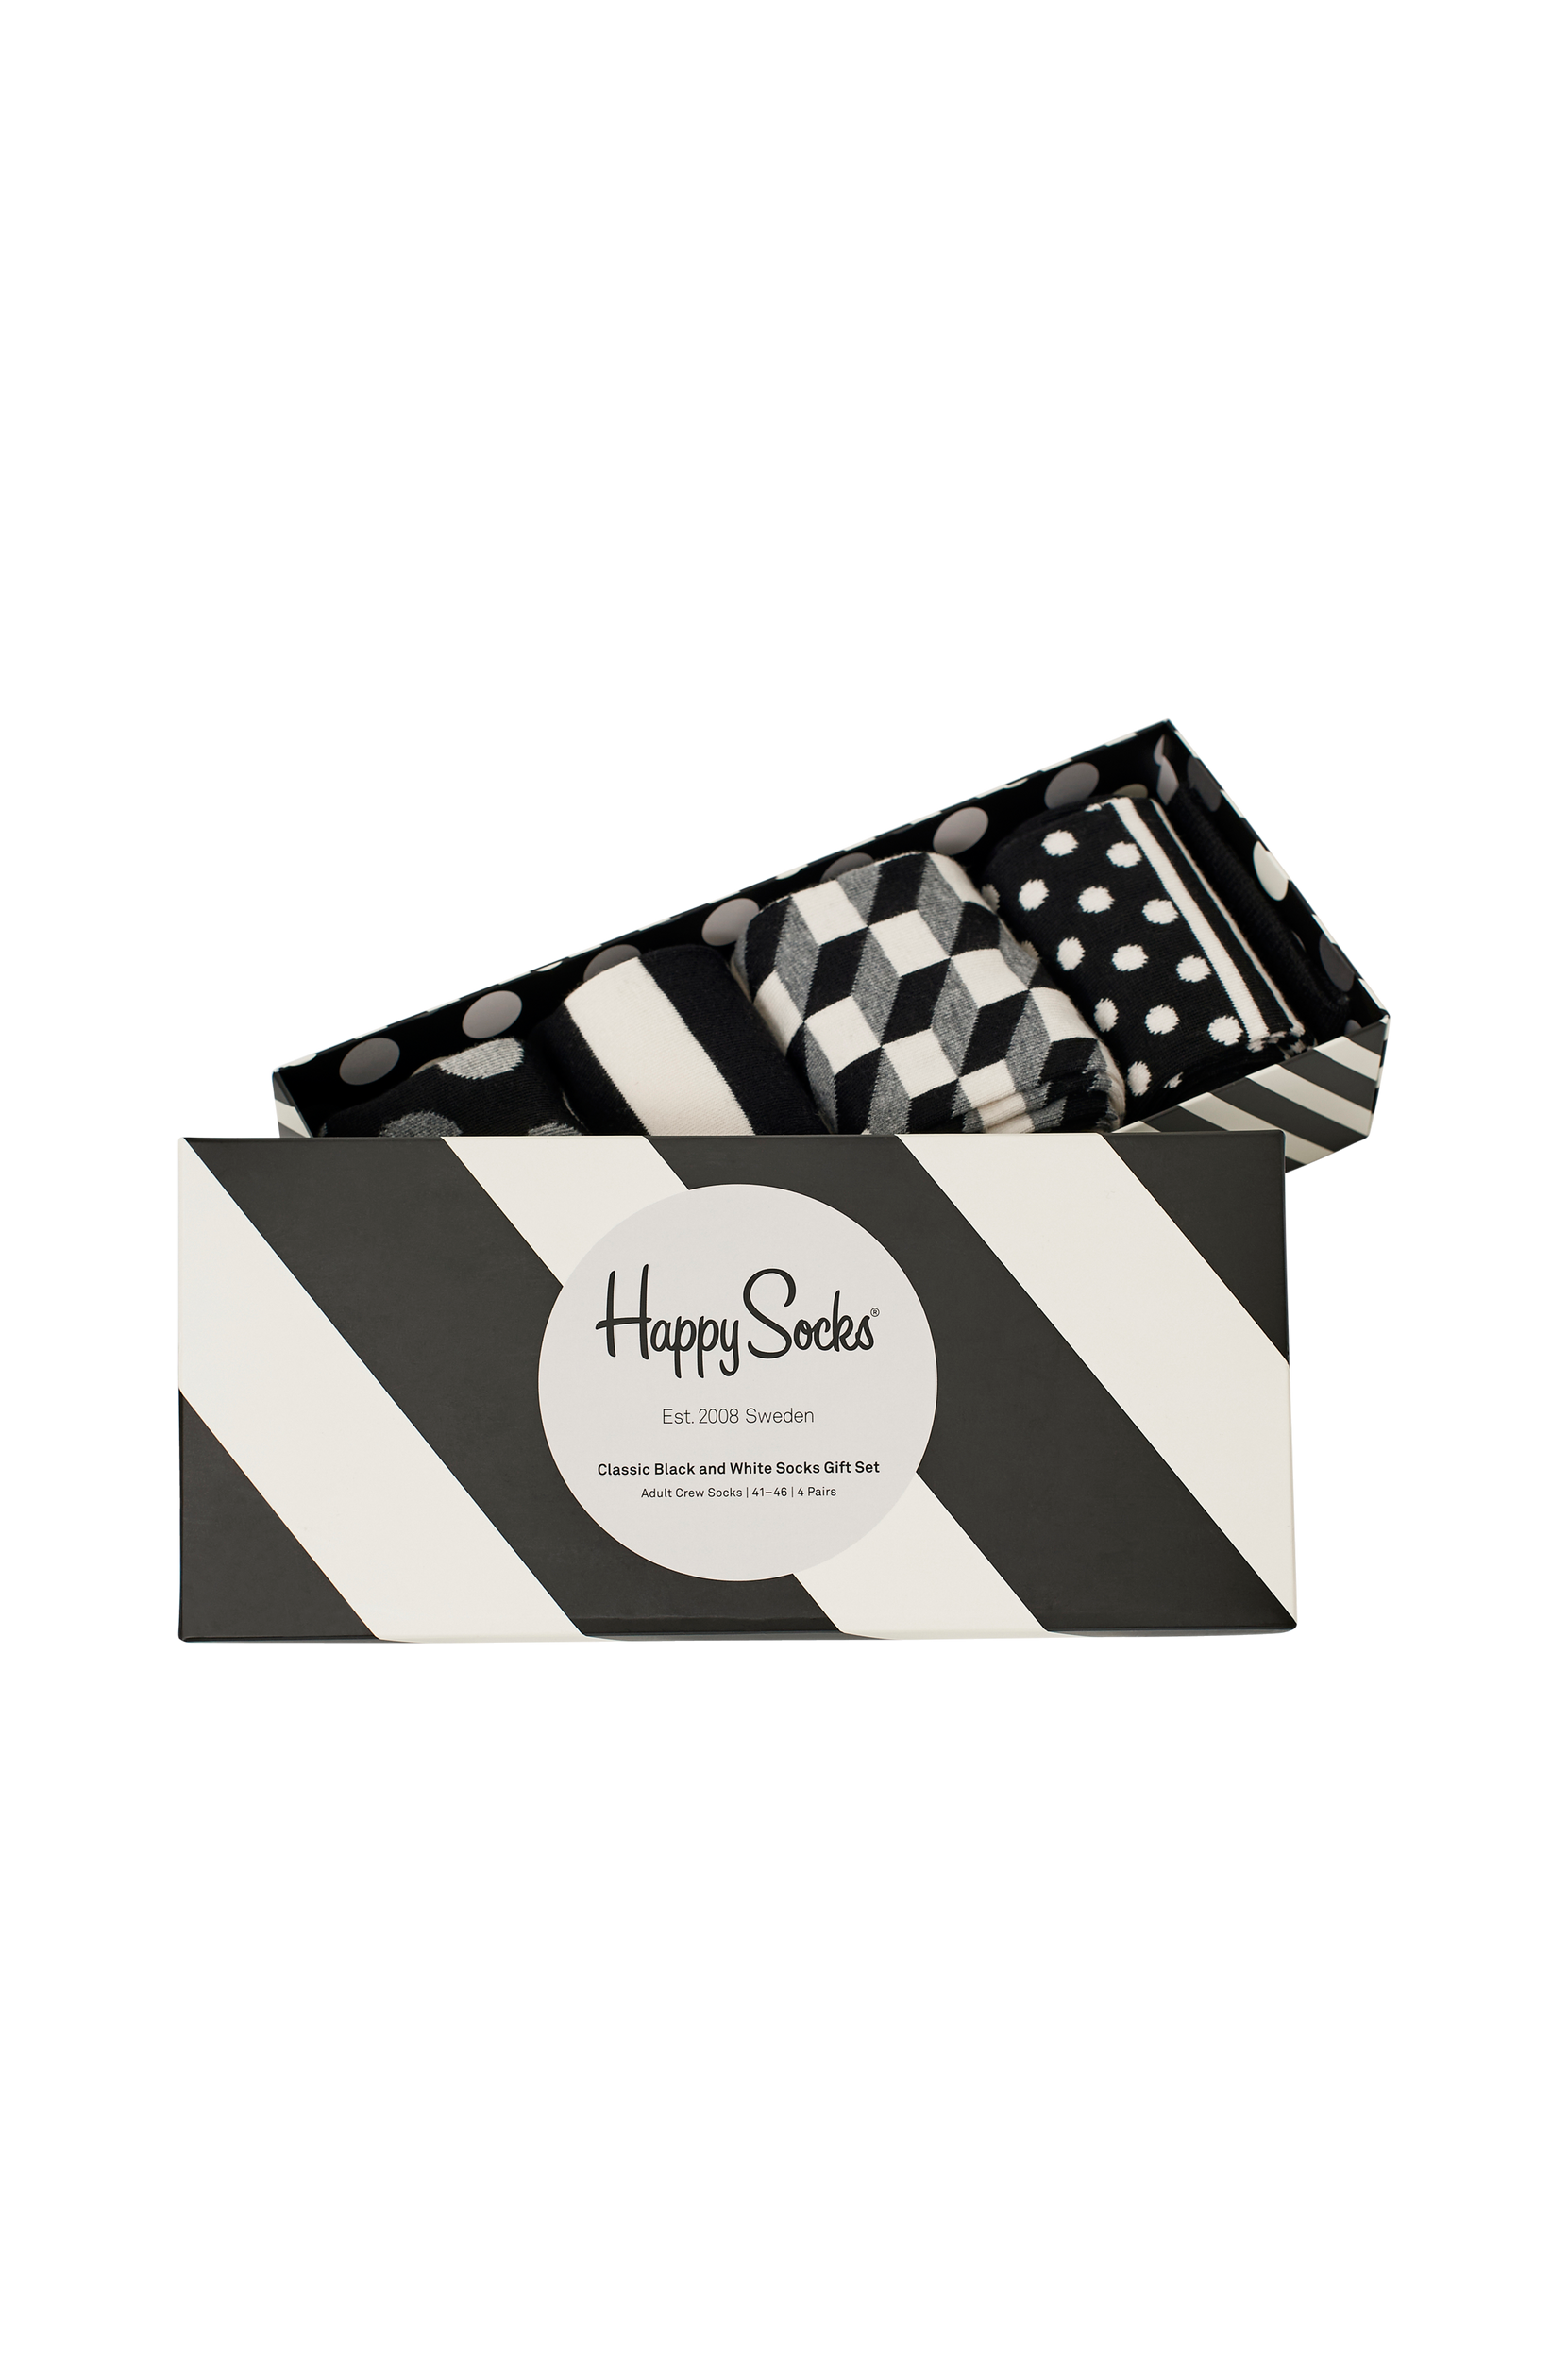 Classic Black & White Socks Gift Set, 4/pakk., Happy Socks